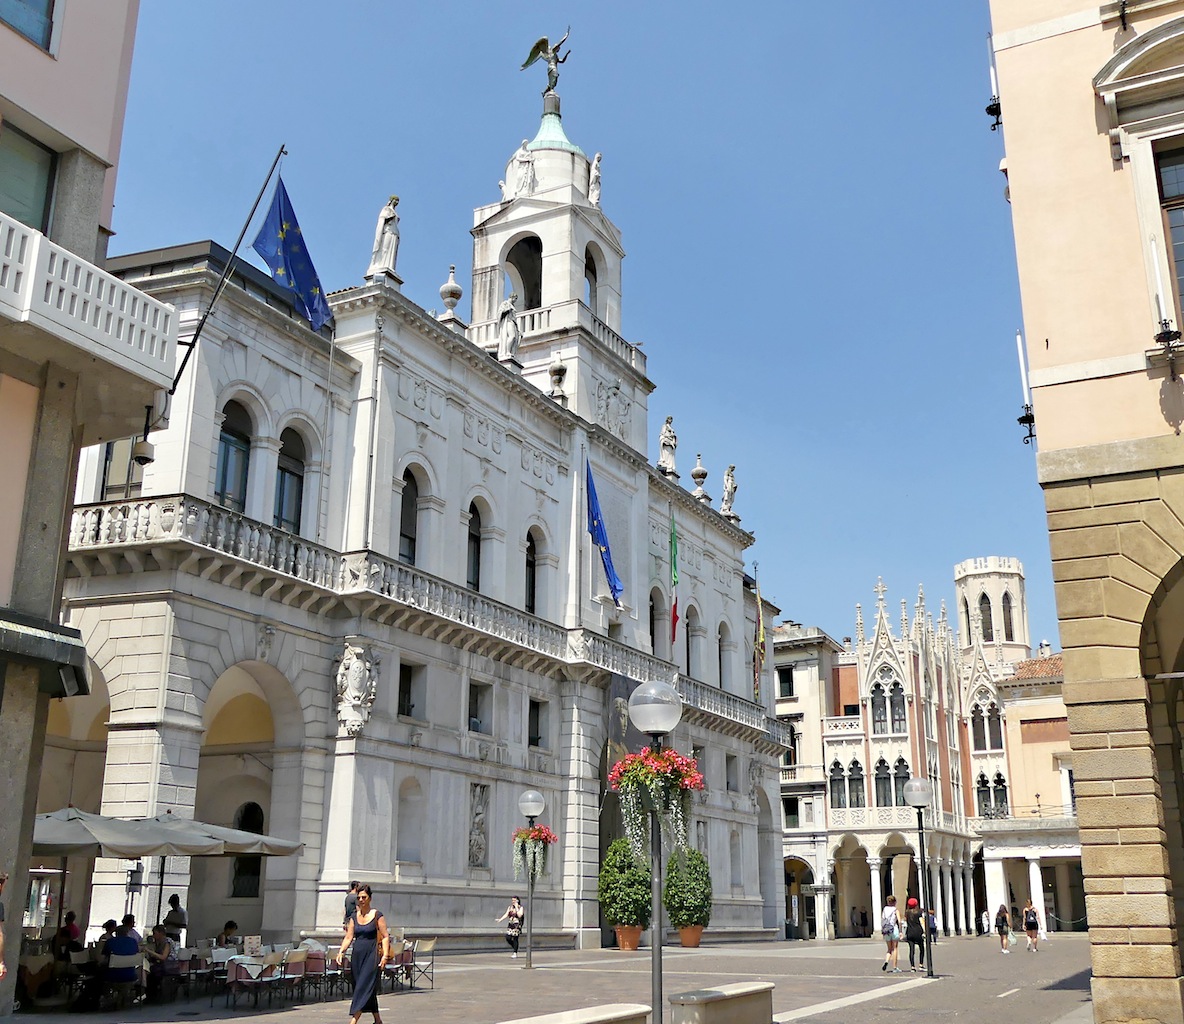 197 Padova Piazza Cavour Palazzo Moroni 2016.jpg